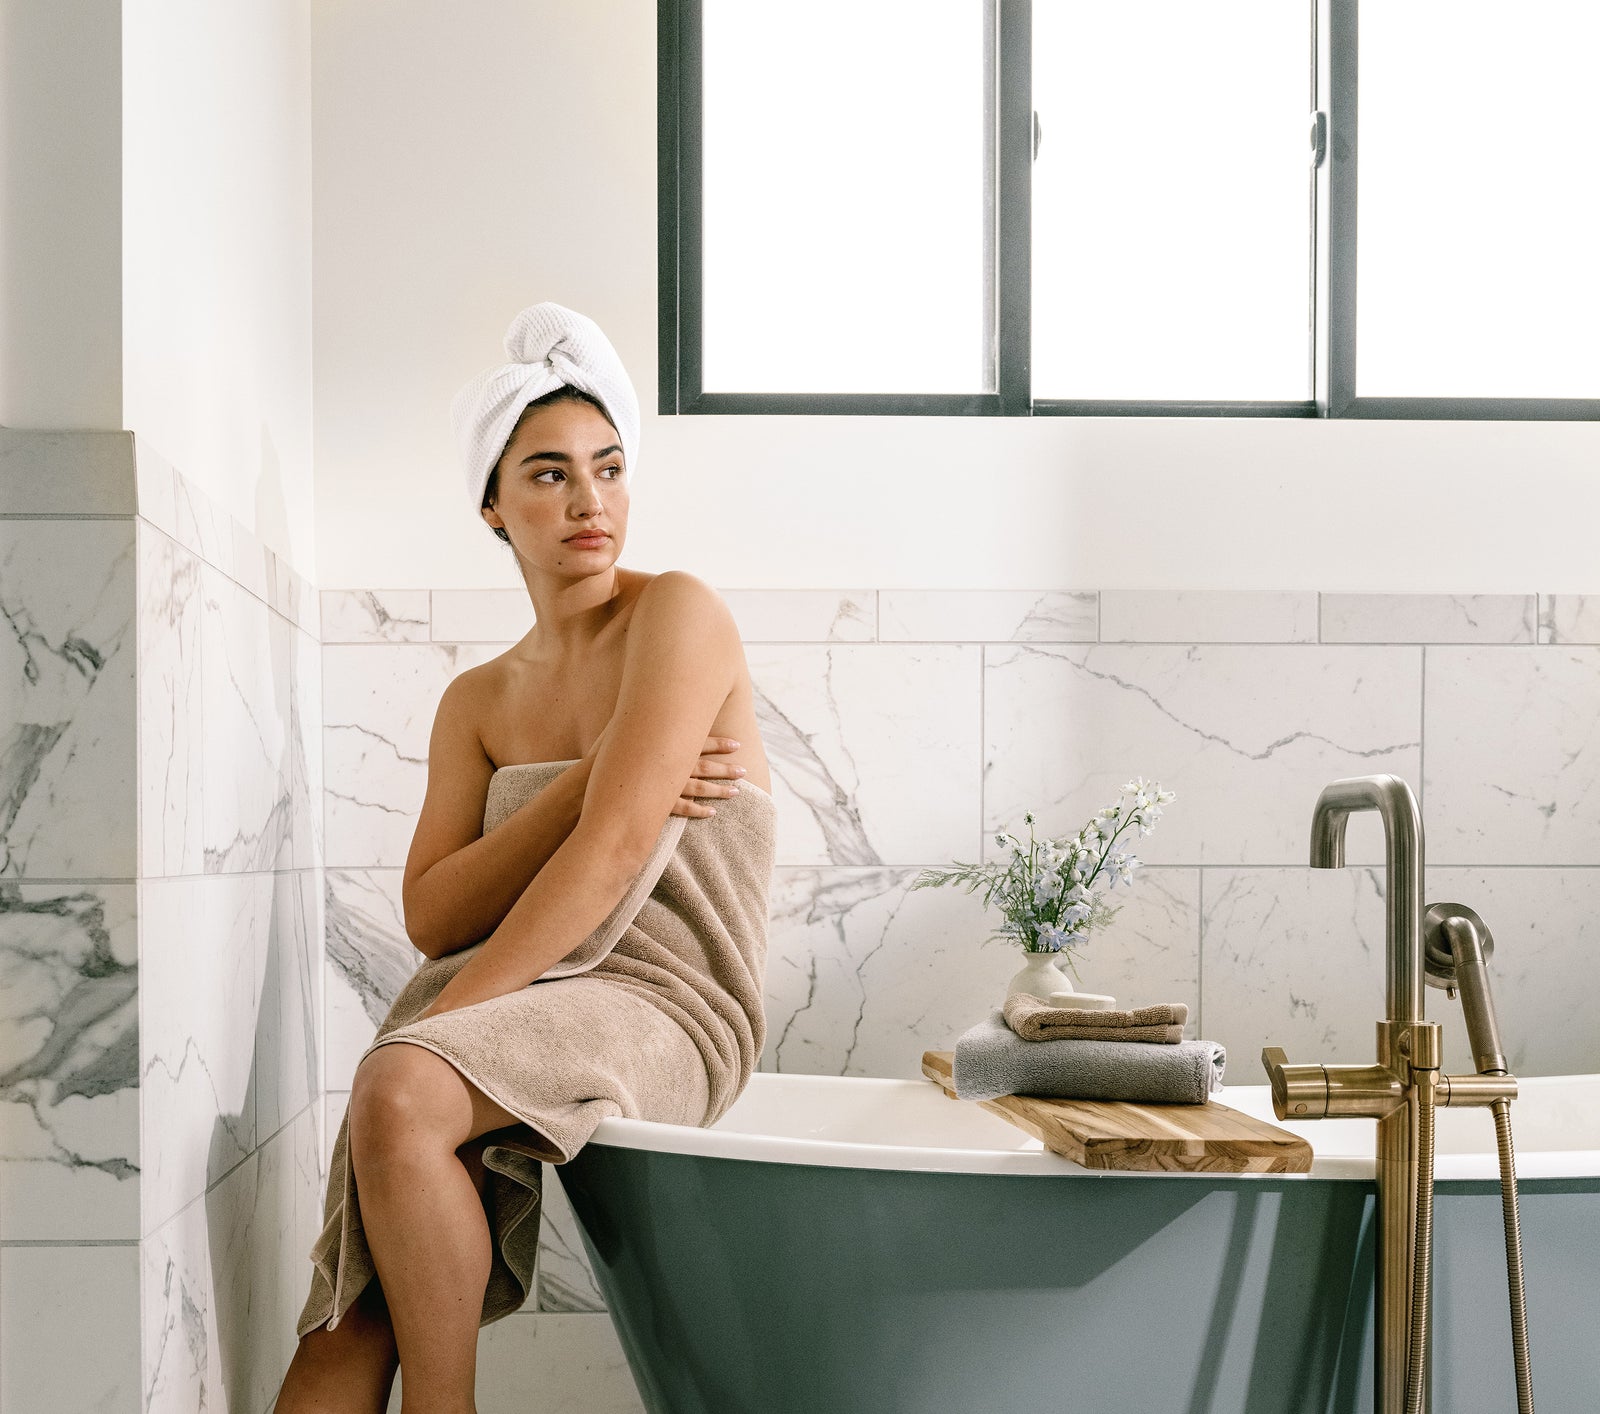 Premium Plush Bath Towels in Charcoal - Cozy Earth